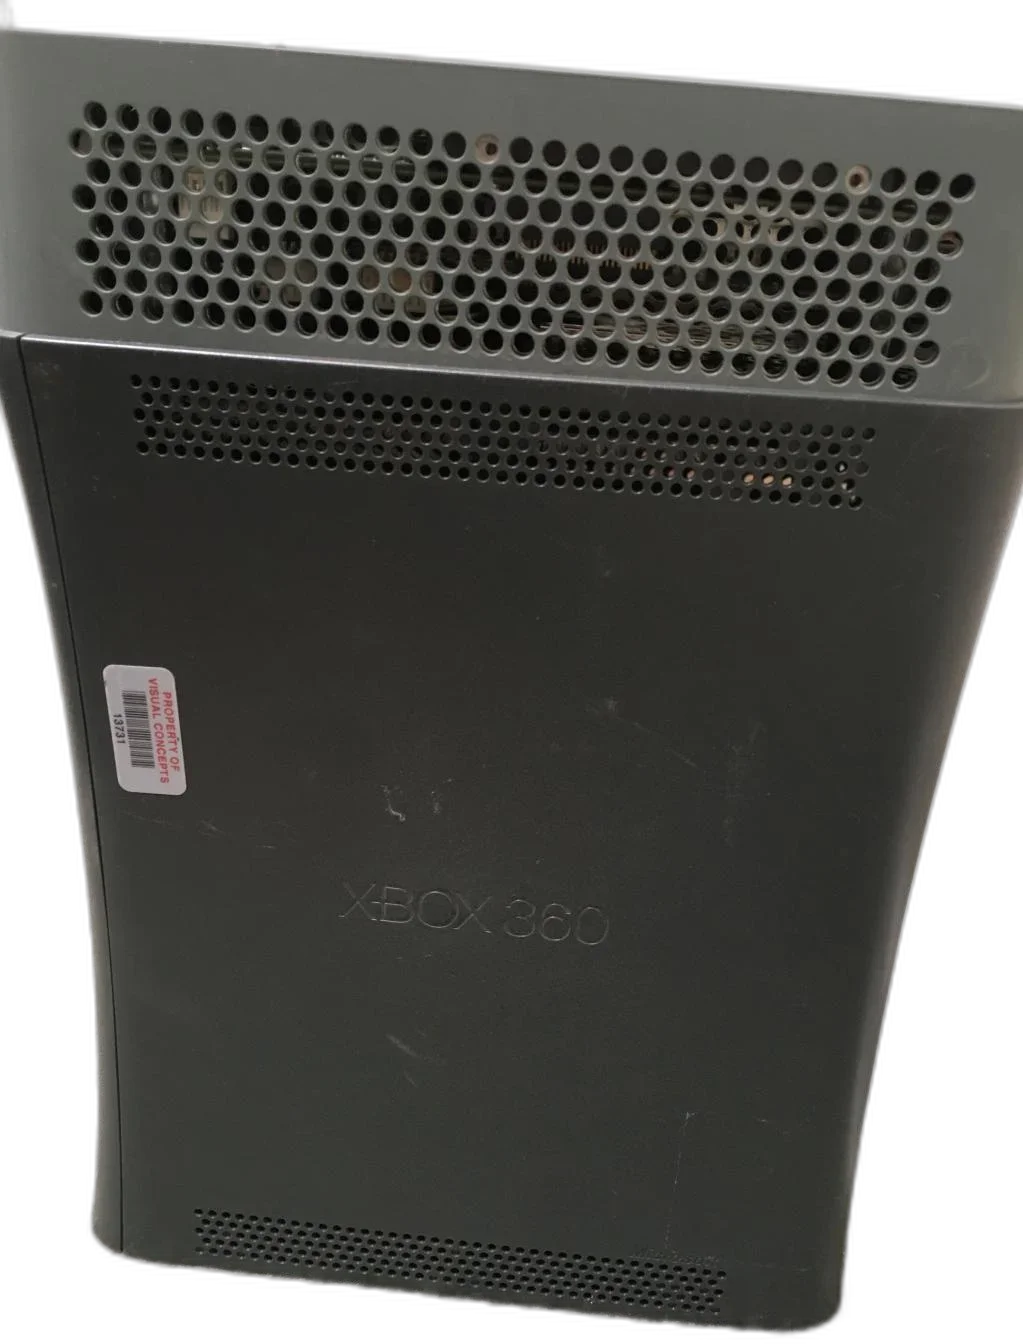  Microsoft Xbox 360 XeDK-1 Rev 009 Console